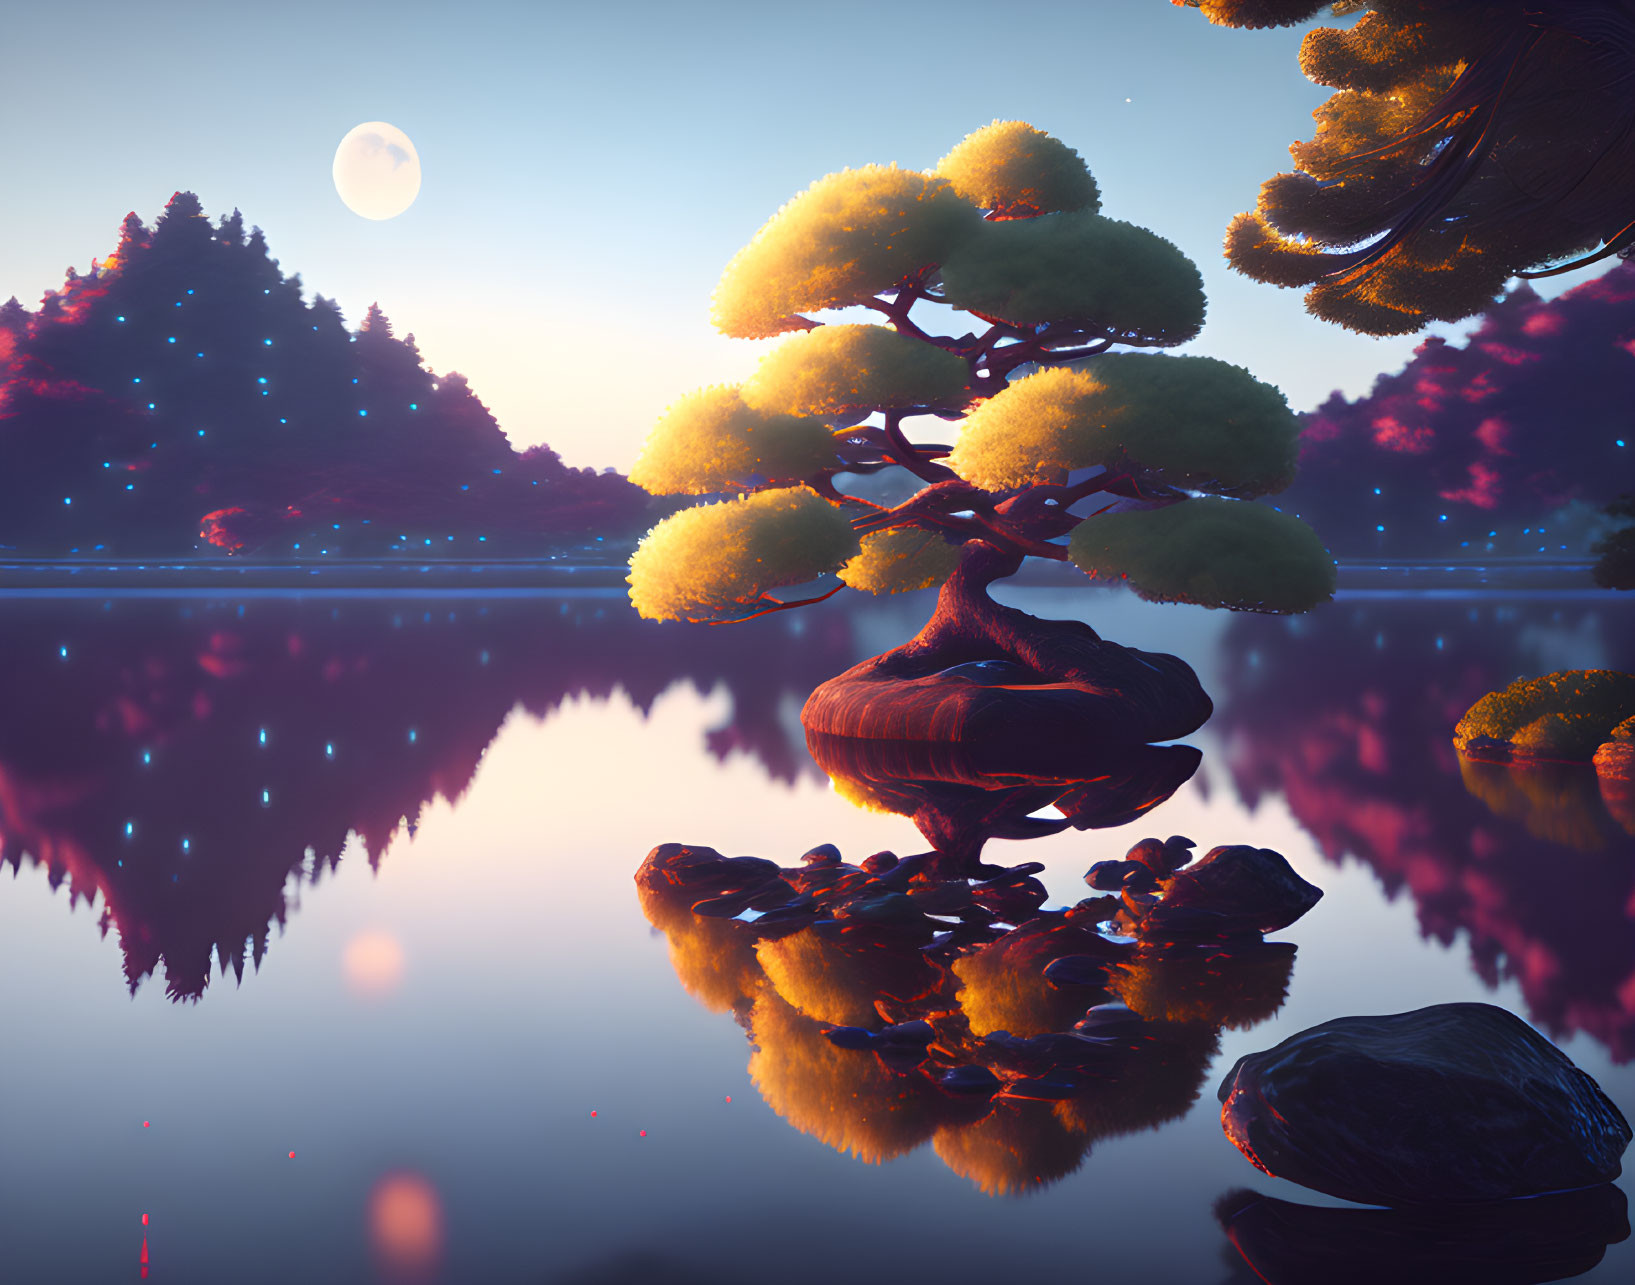 Tranquil landscape with Bonsai tree on lake, moonlit twilight sky